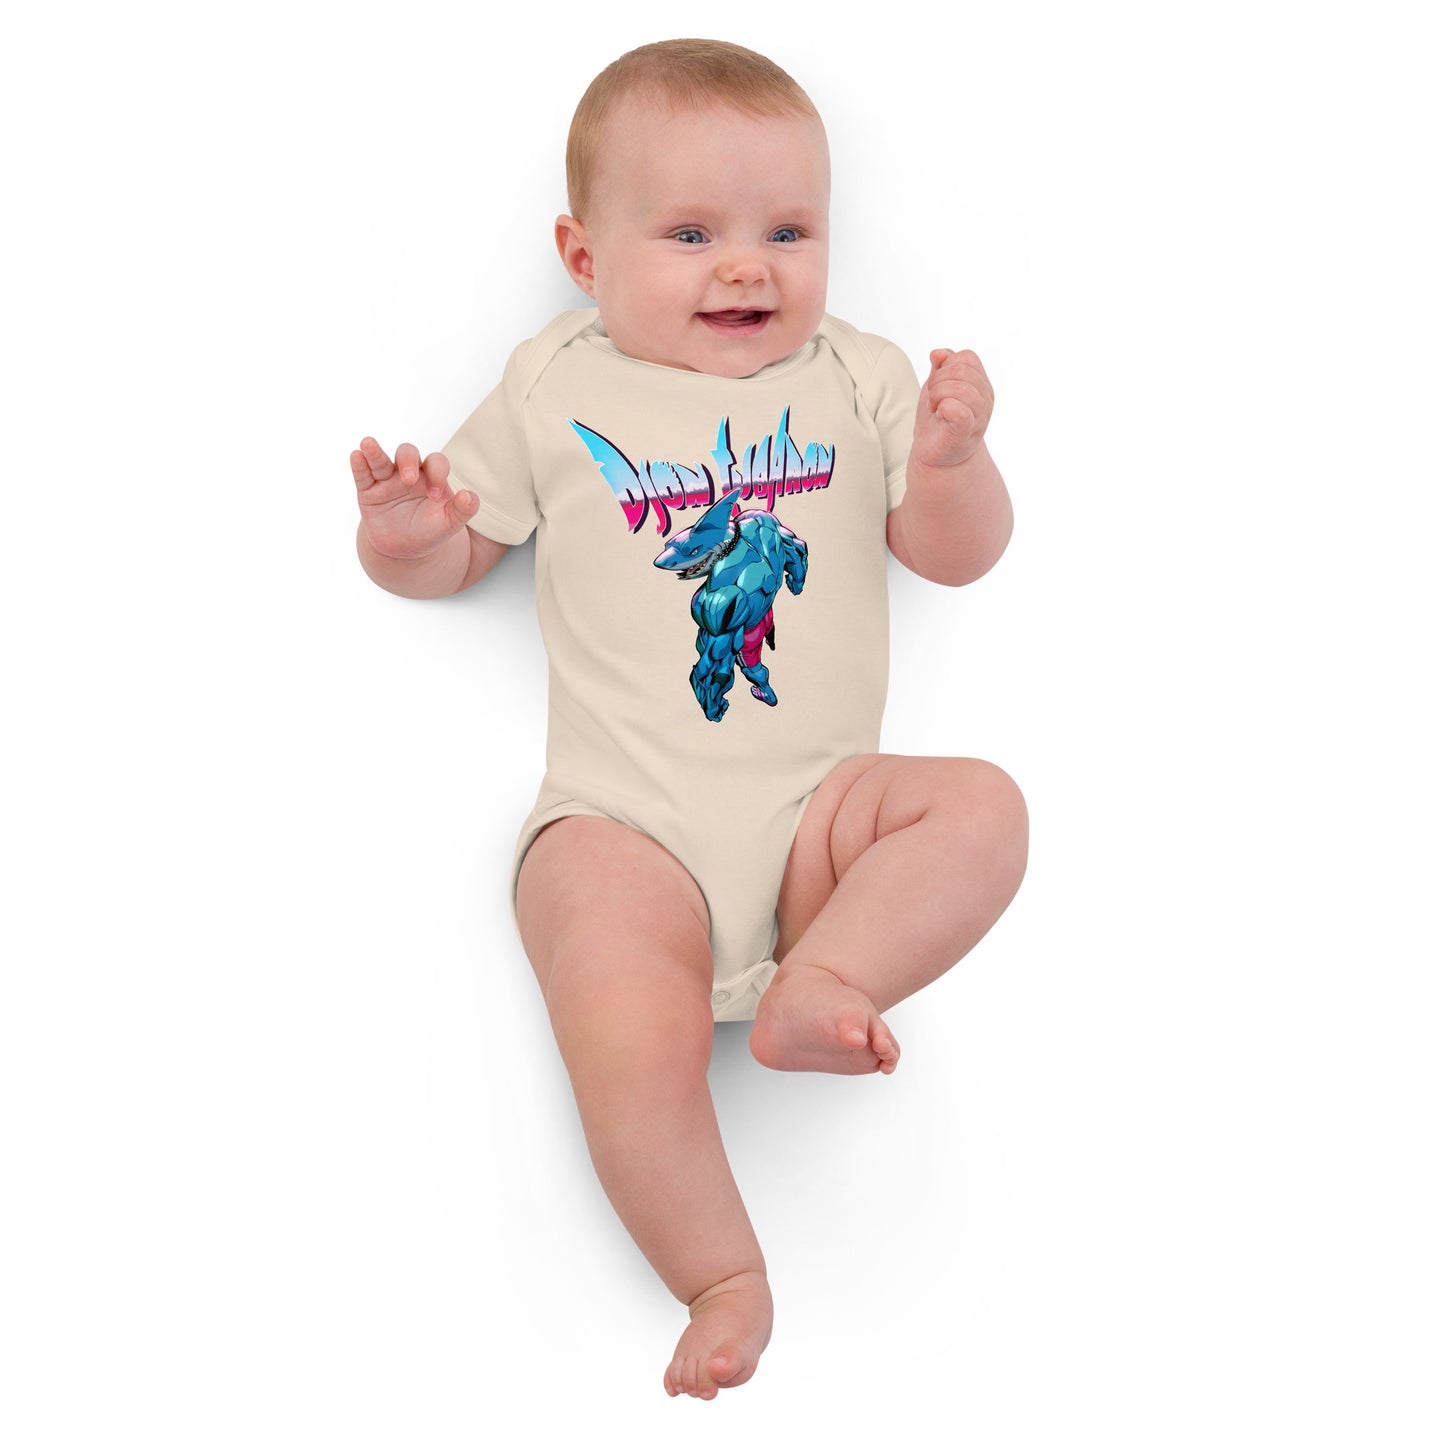 CvLs BS Organic cotton baby bodysuit